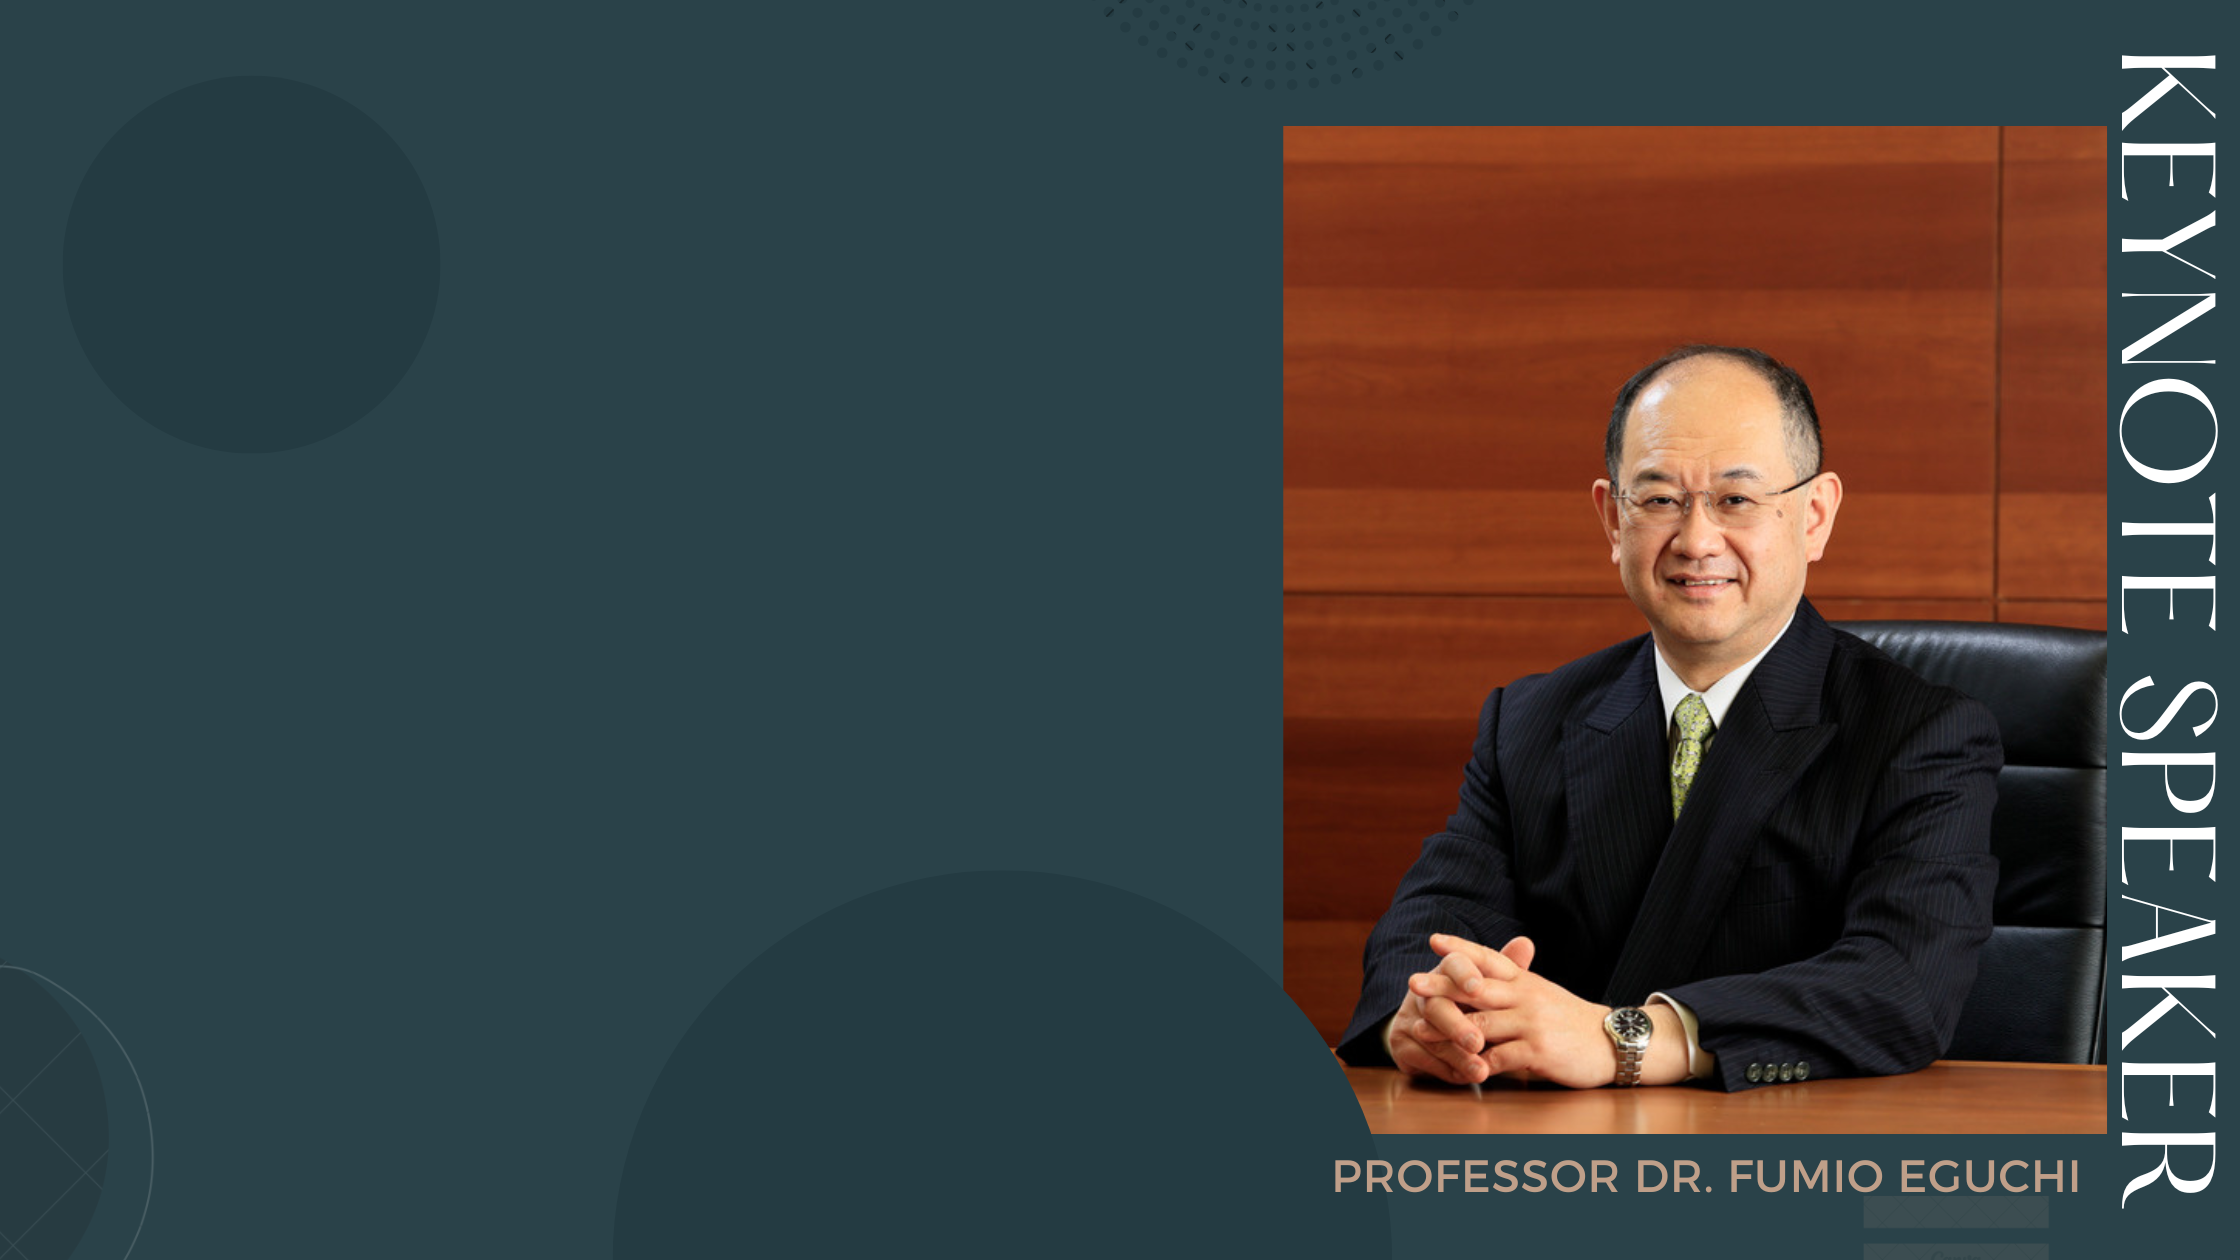 Keynote Speaker PROFESSOR DR. FUMIO EGUCHI Tokyo University of Agriculture Educational Corporation Chairman,President